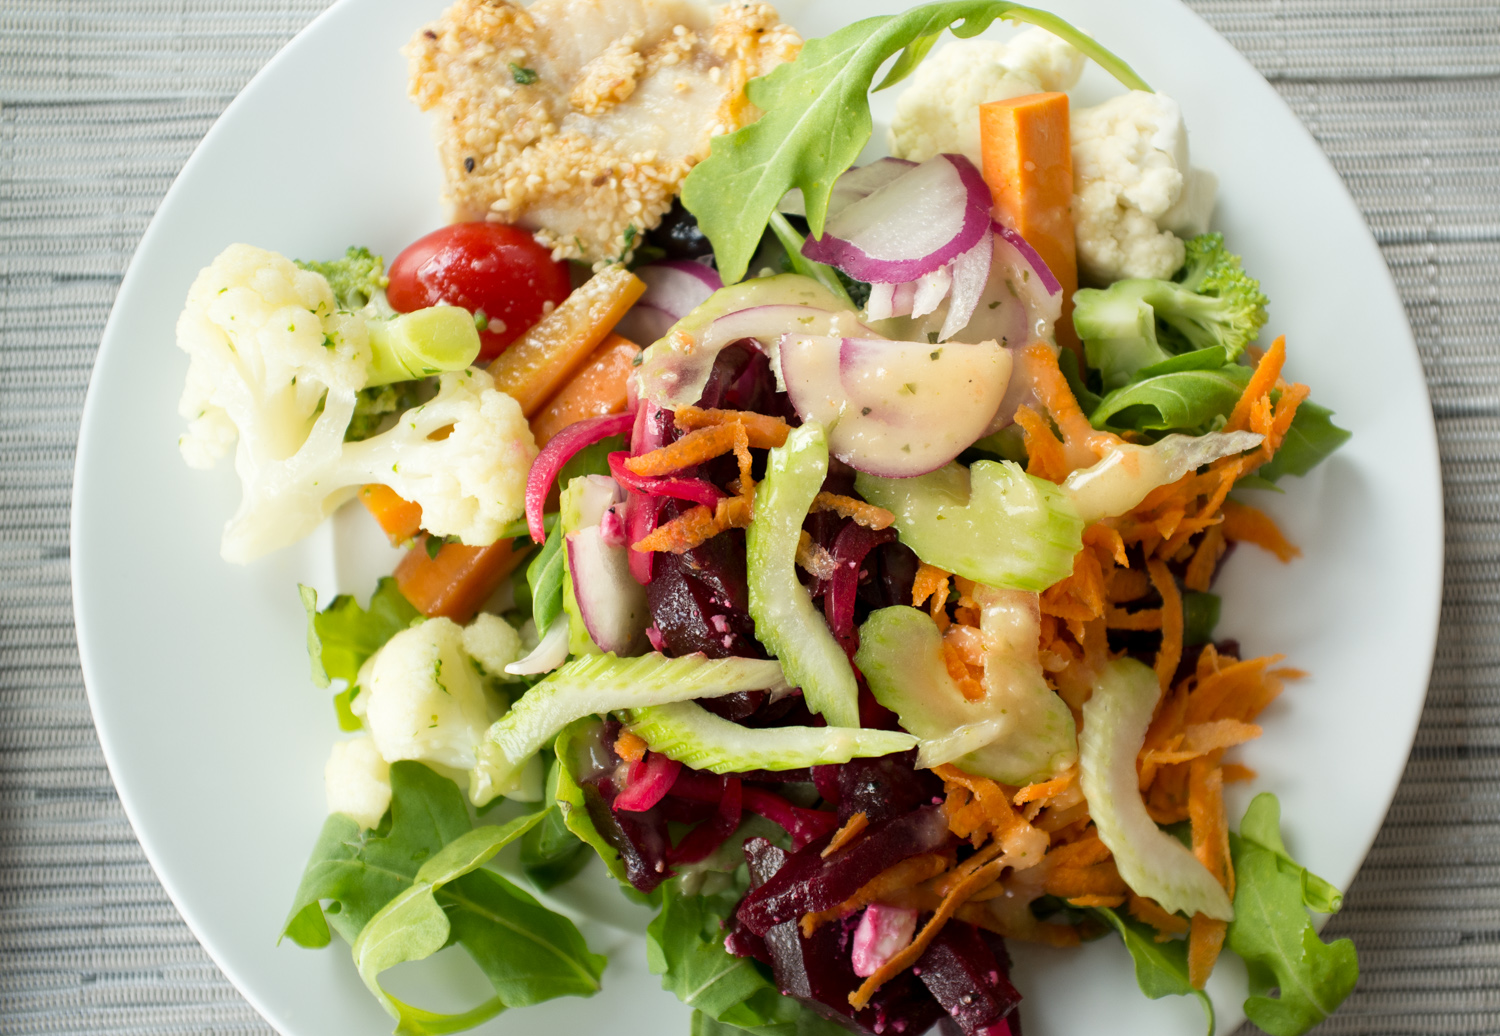 cruise_lunch salad.jpg